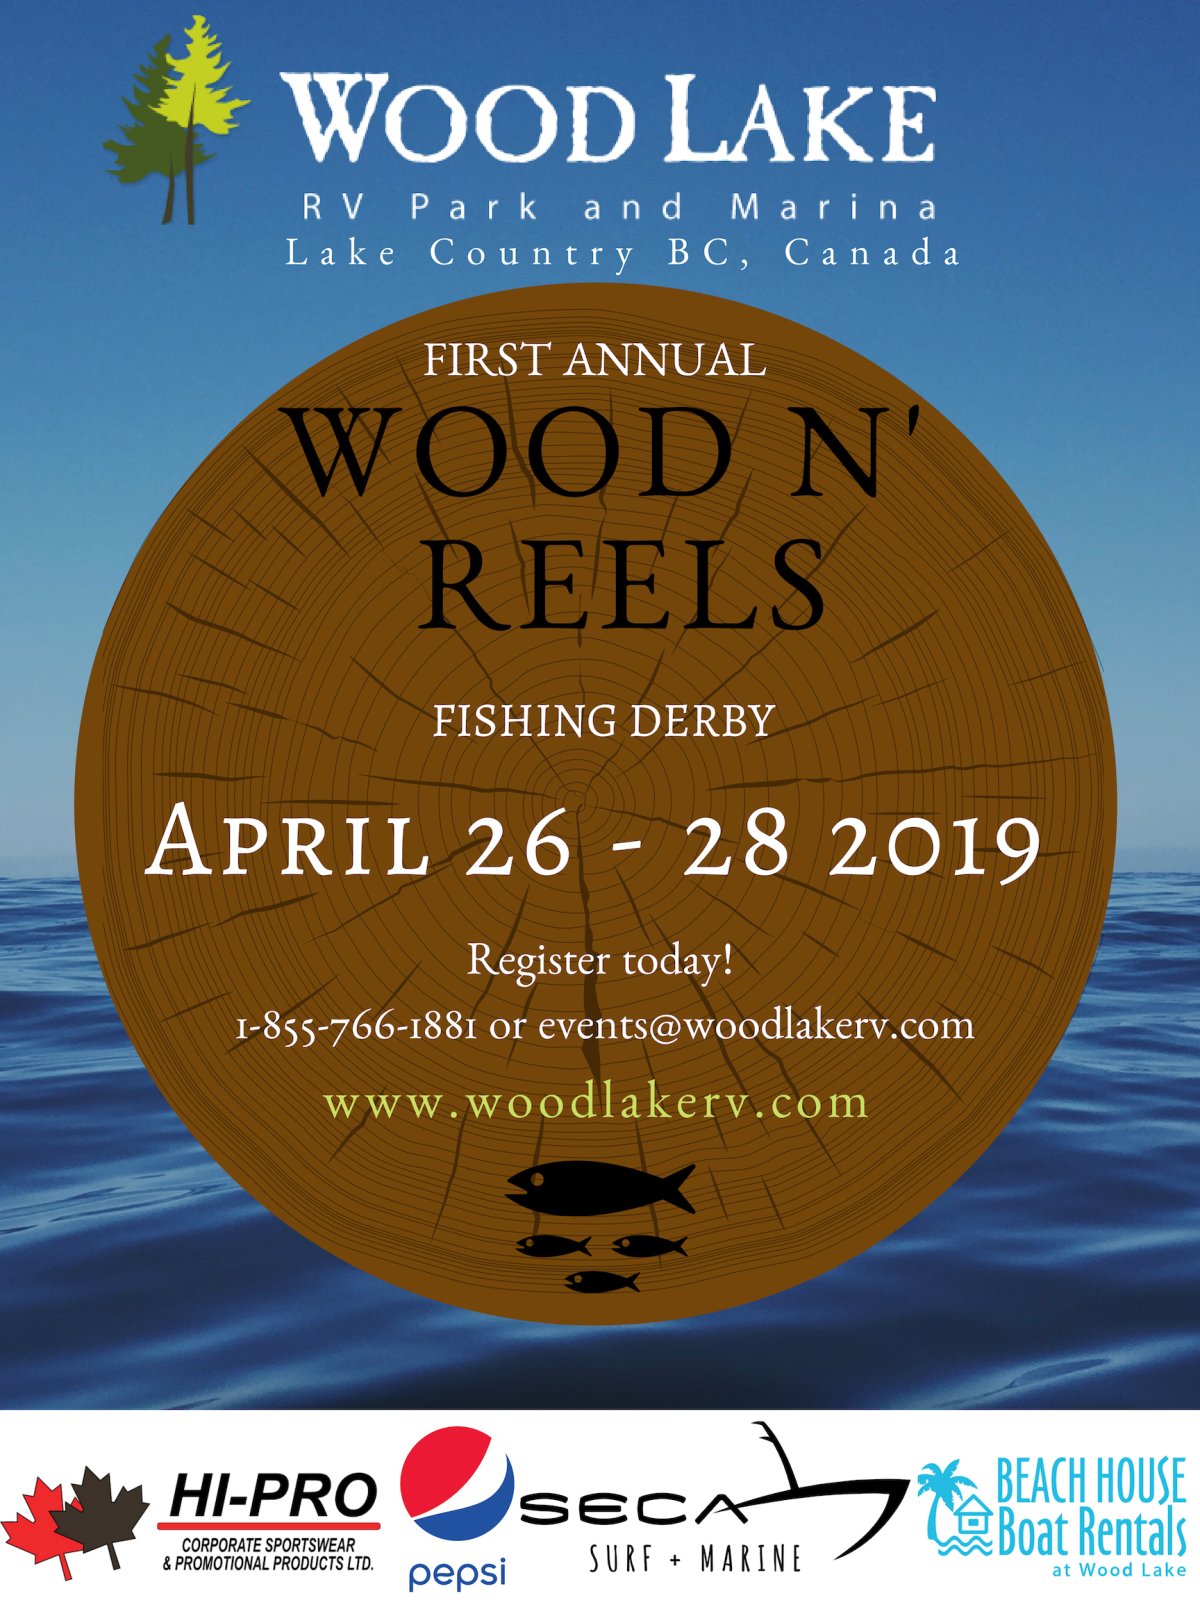 First Annual Wood N’ Reels Fishing Derby - image